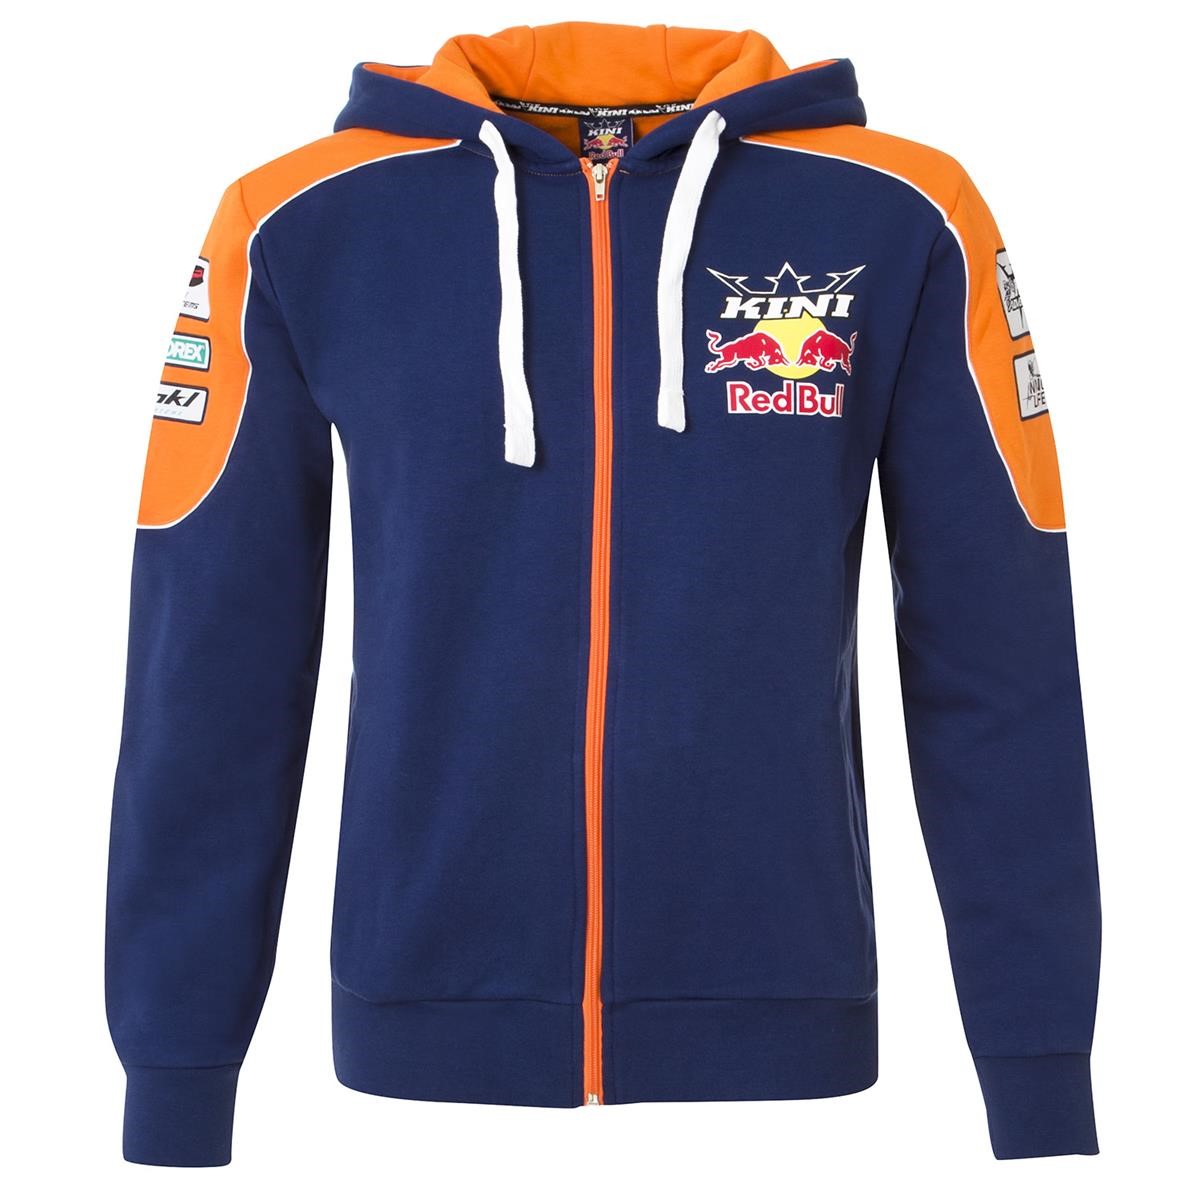 Kini Red Bull Zip-Hoody Team Orange/Navy